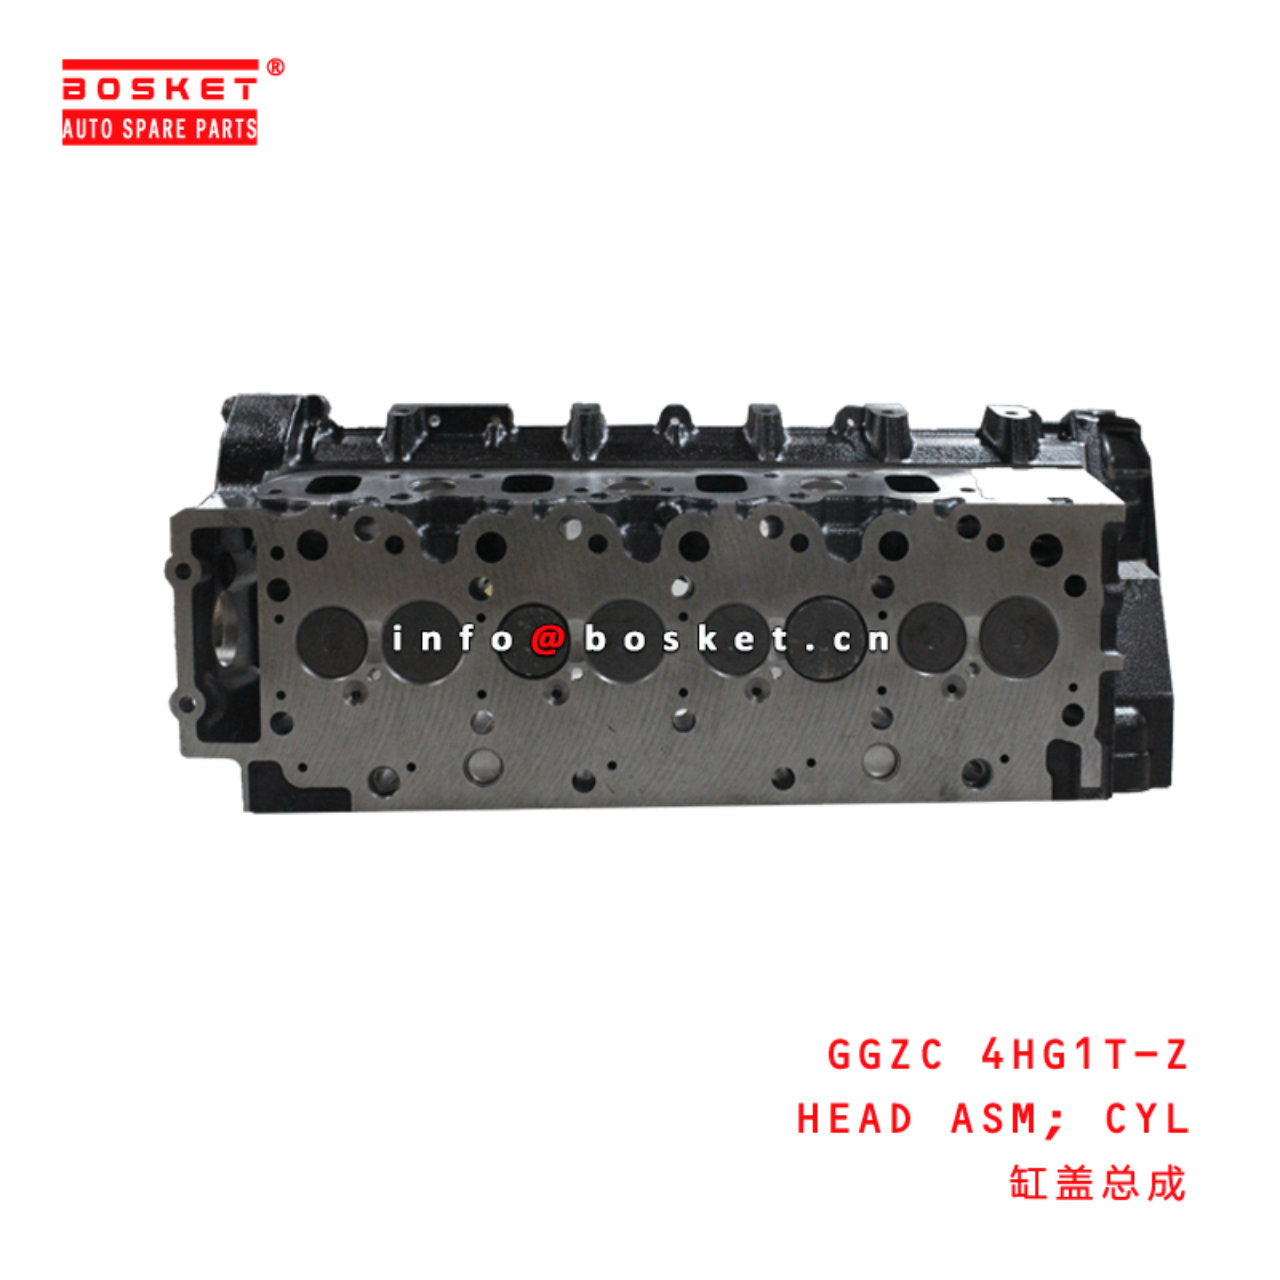 GGZC 4HG1T-Z Cylinder Head Assembly GGZC 4HG1TZ Suitable for ISUZU 4HG1T 